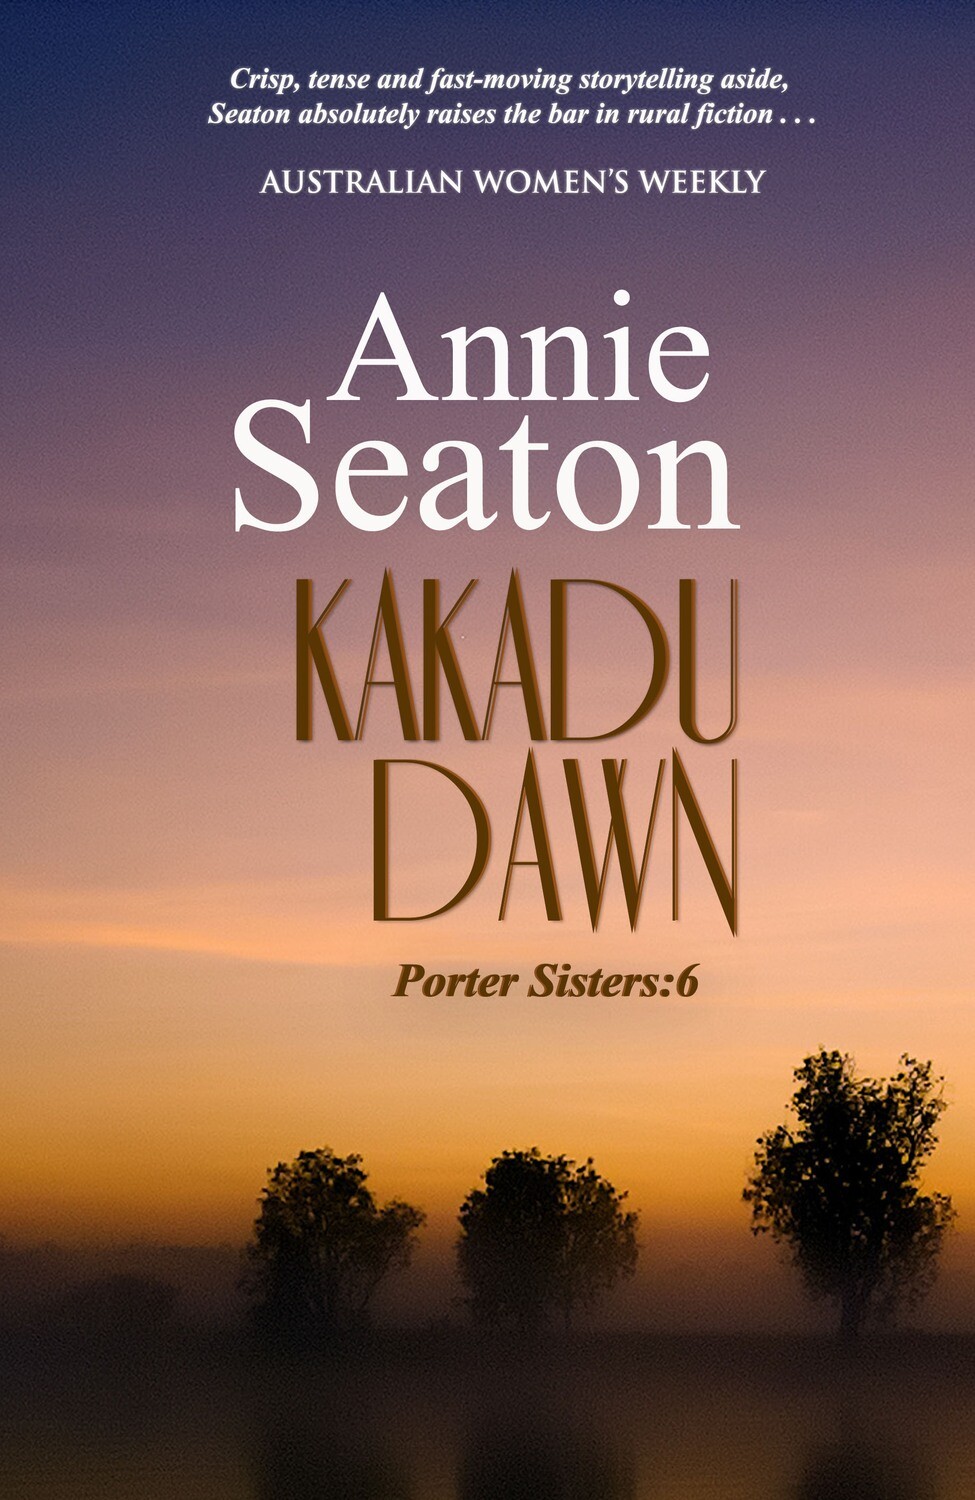 Kakadu Dawn (Porter Sisters Book 6)